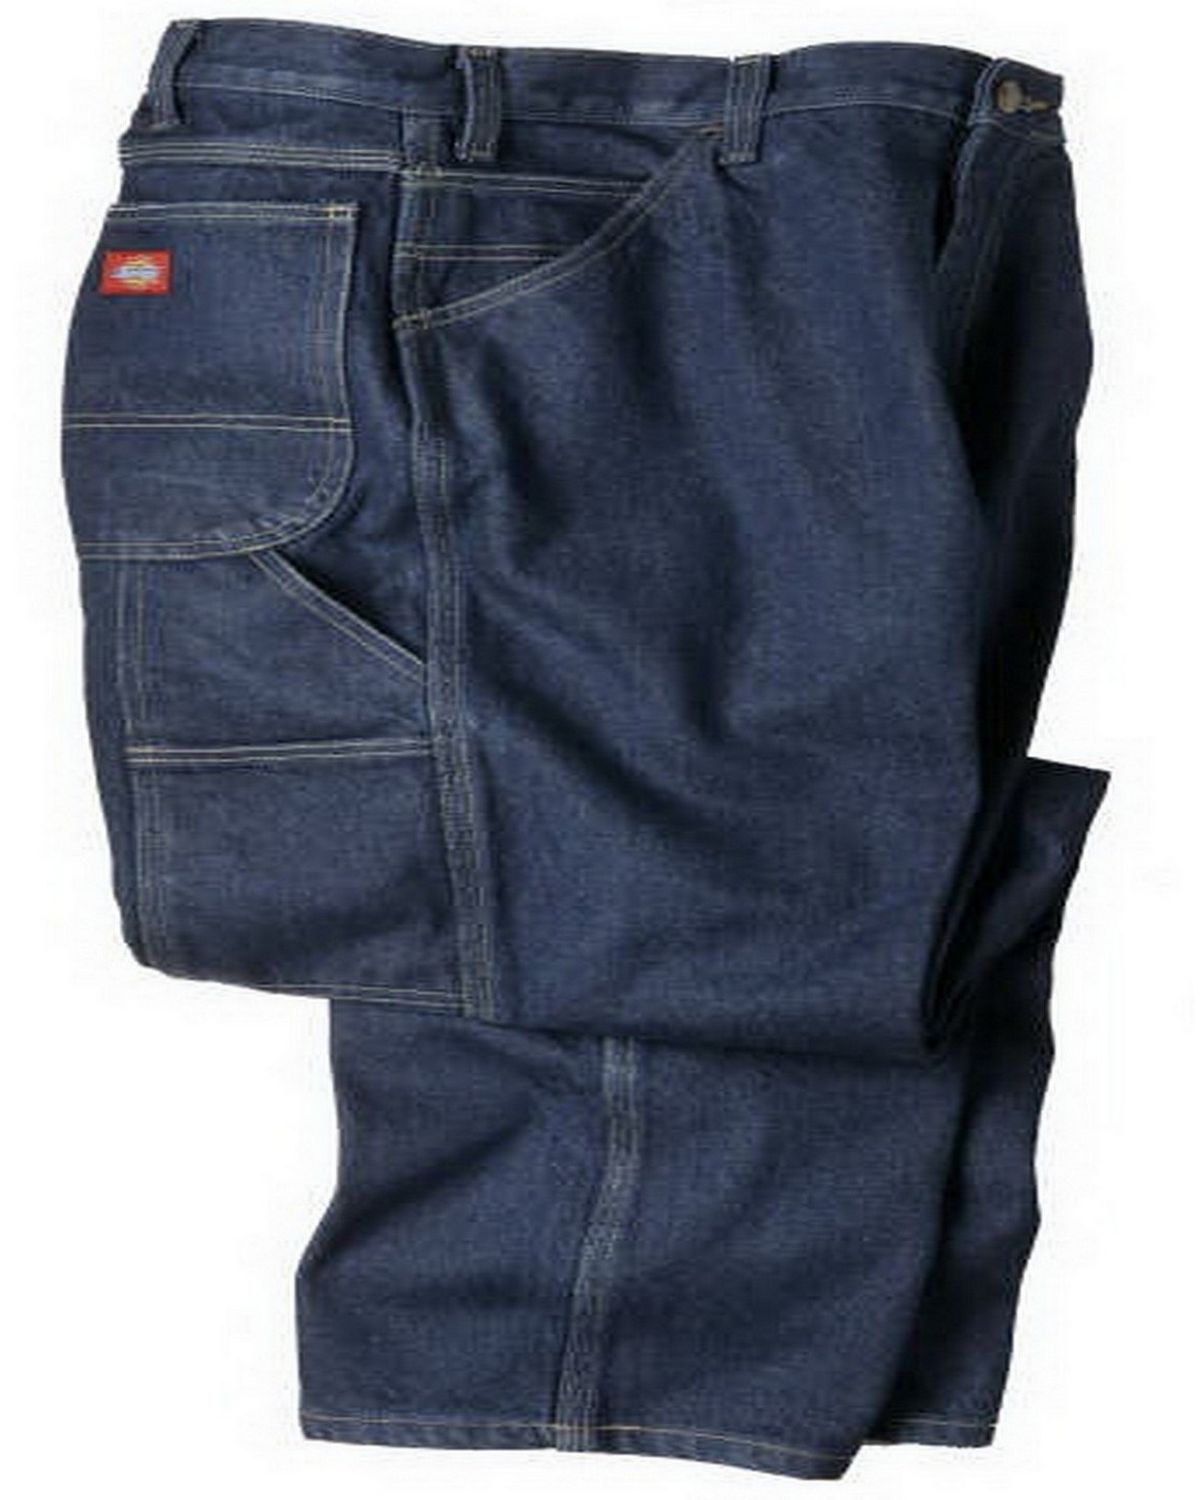 dickies industrial carpenter jeans